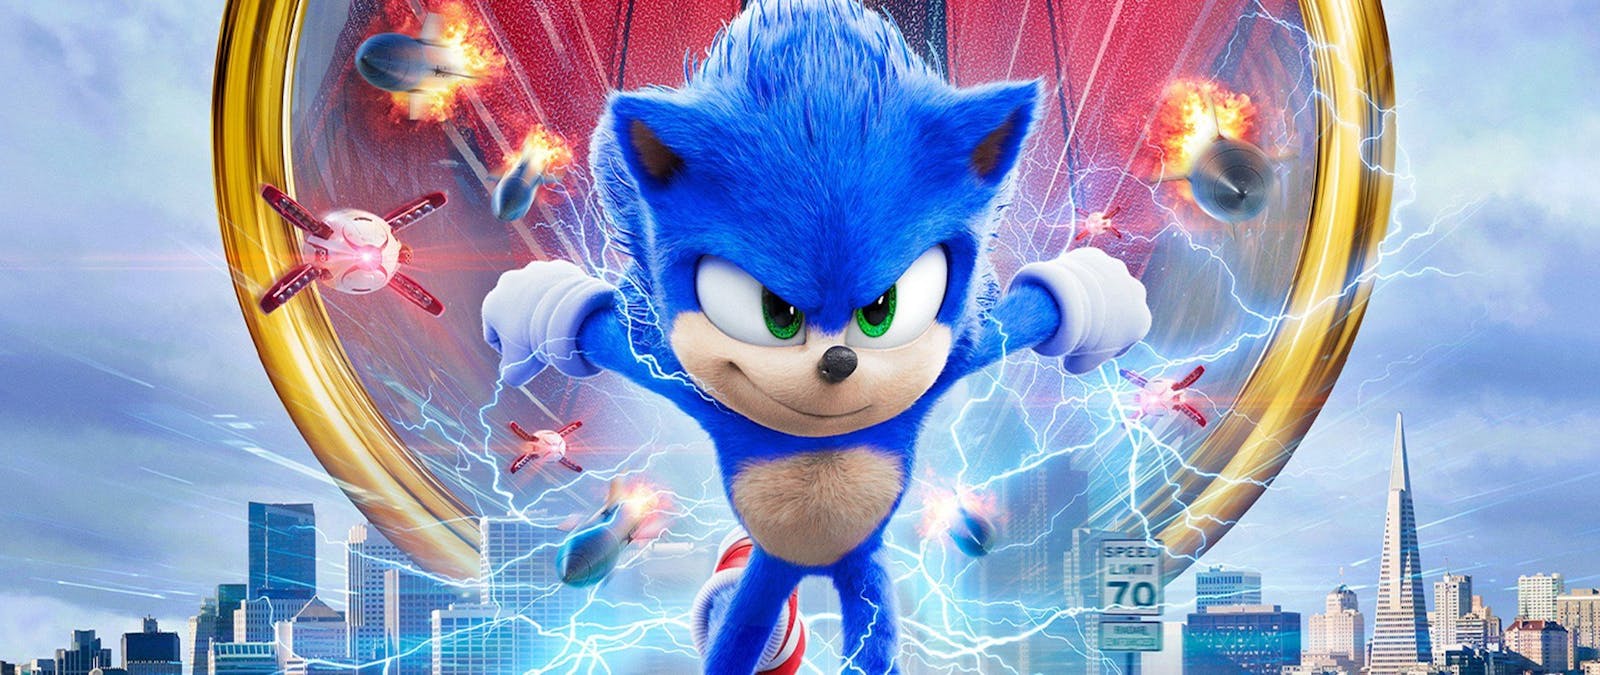 Produktionen av Sonic 2 har inletts